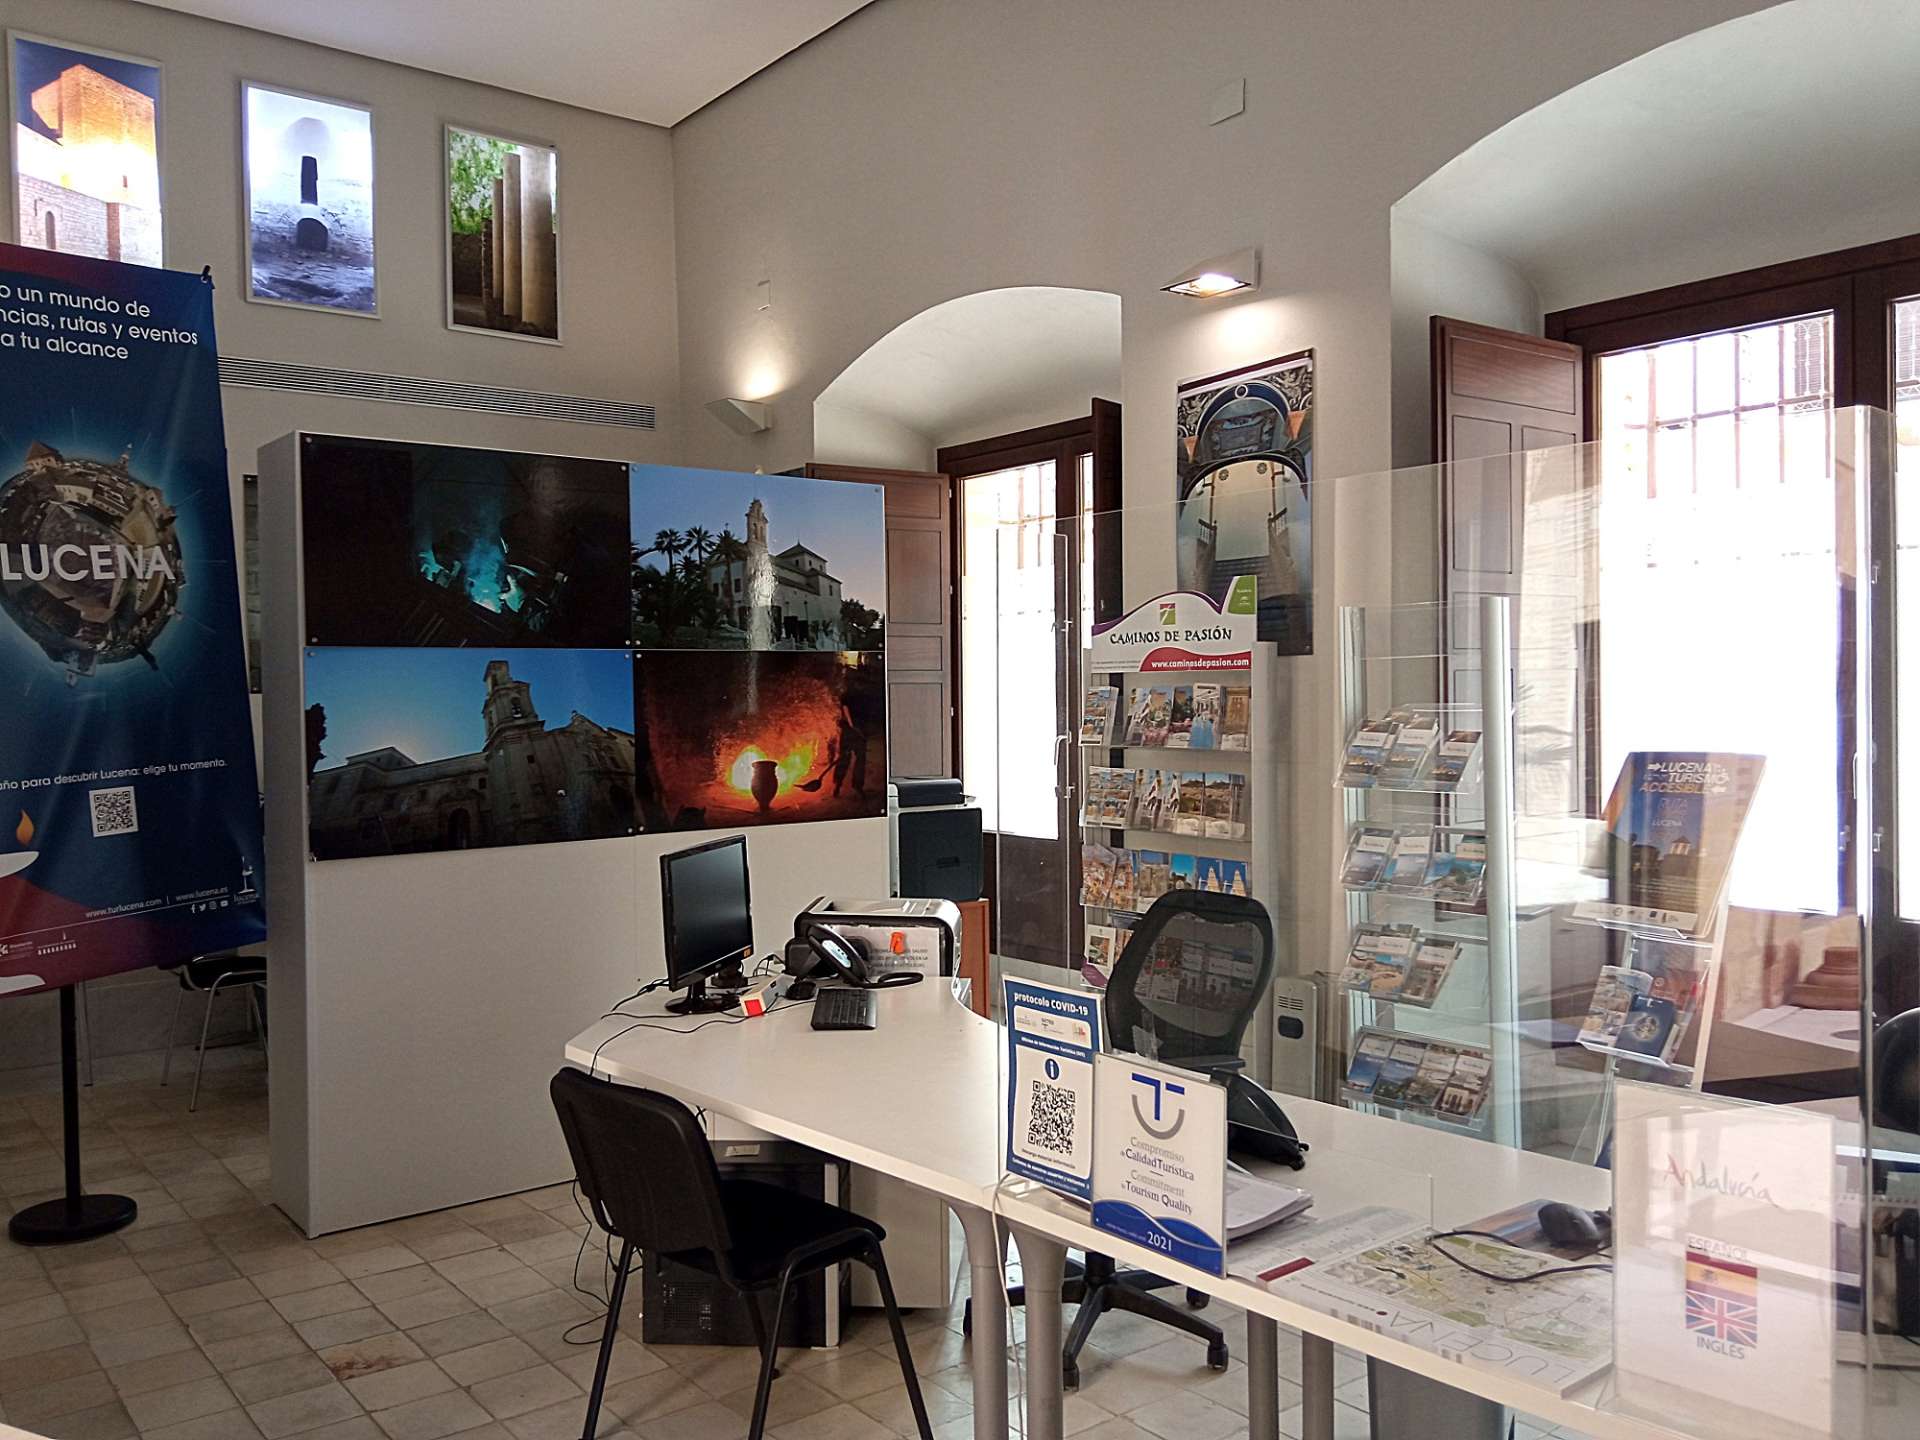 Office de Tourisme de Lucena.